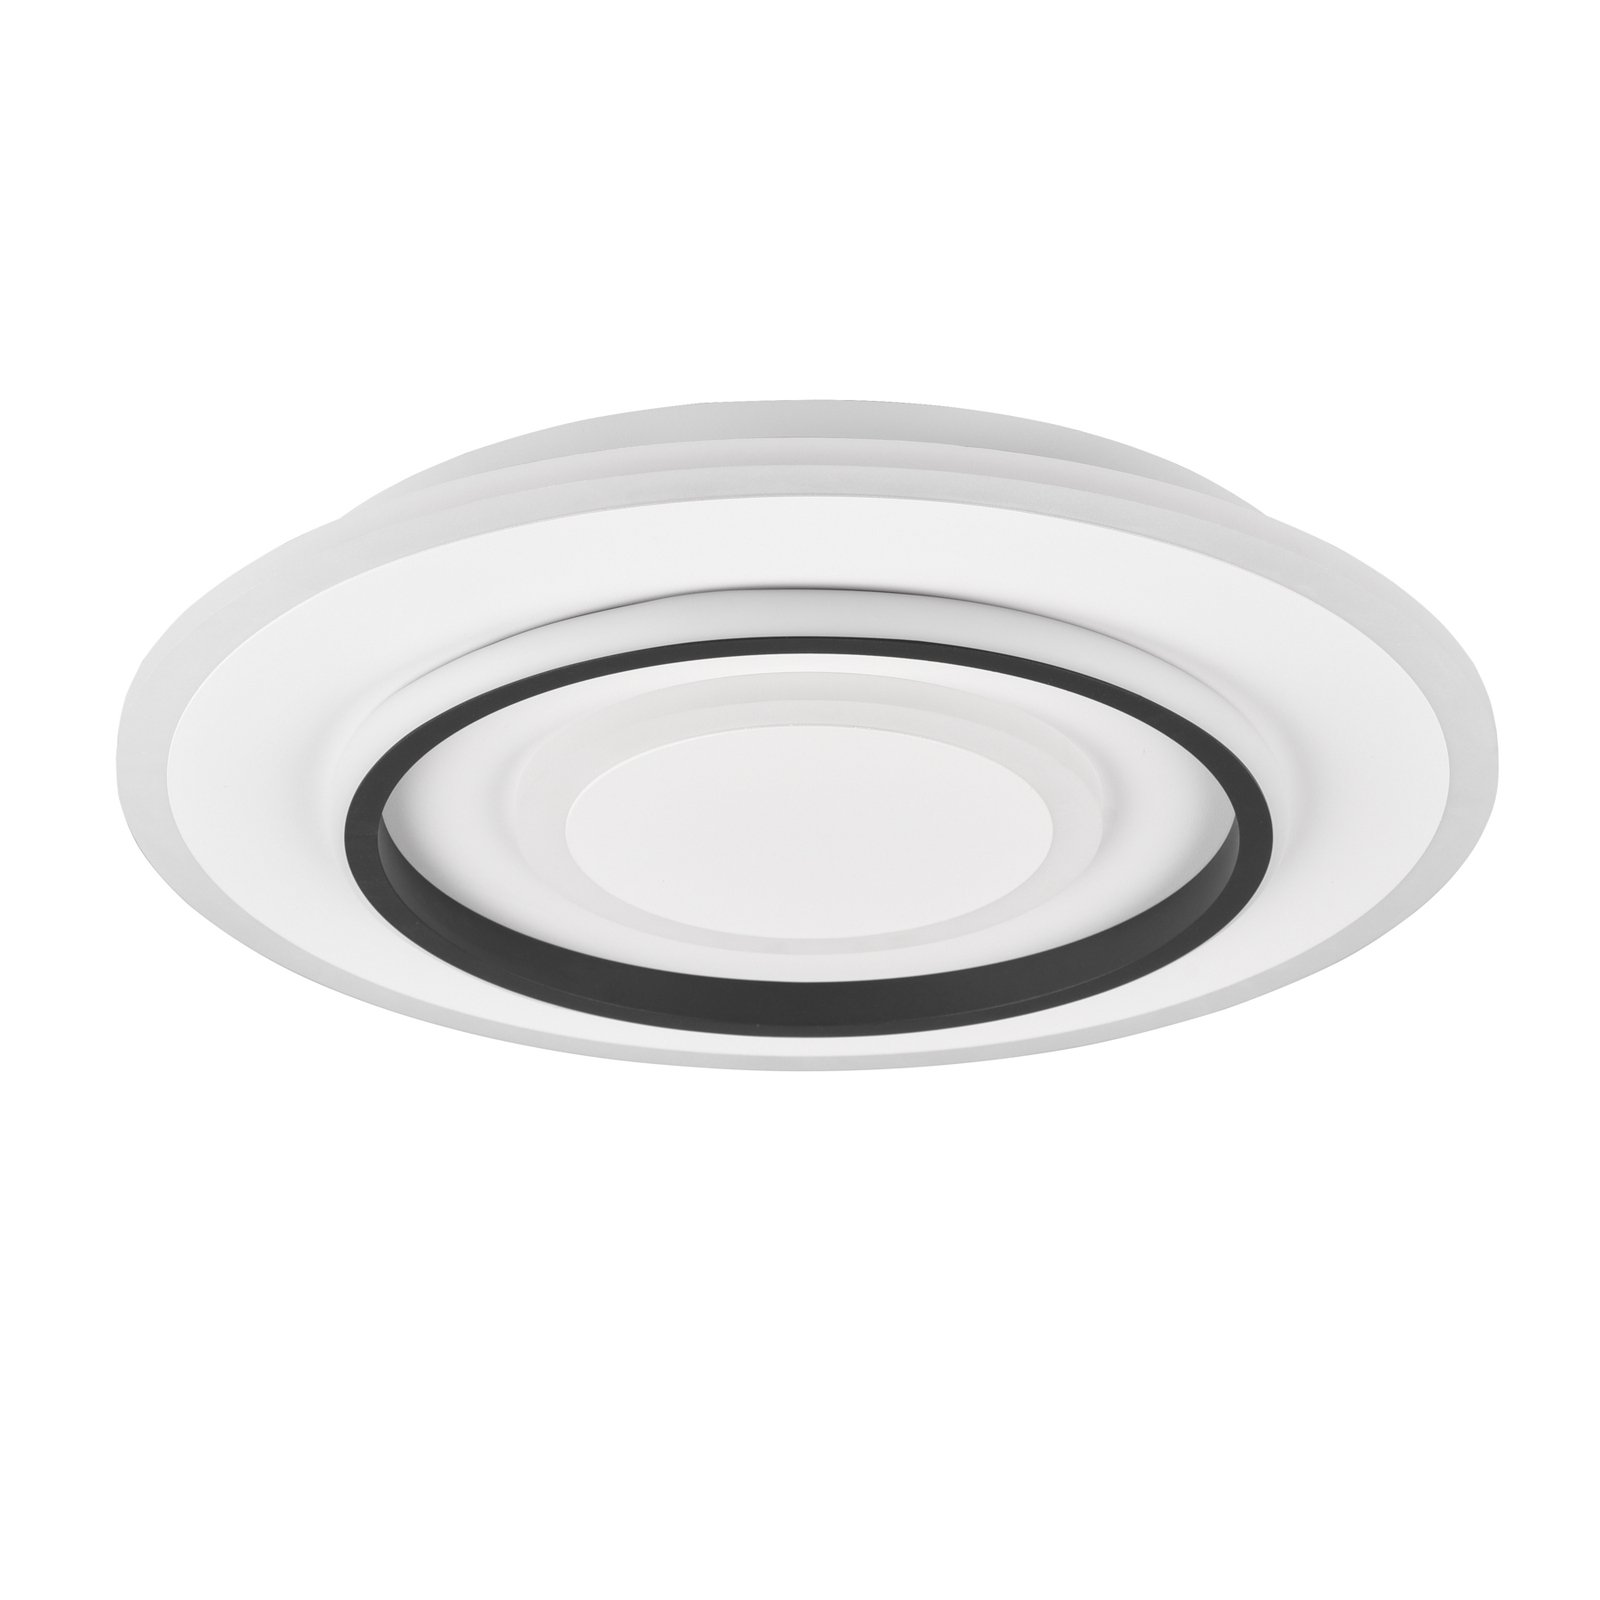 LED-taklampa Jora rund med fjärrkontroll, Ø 41 cm